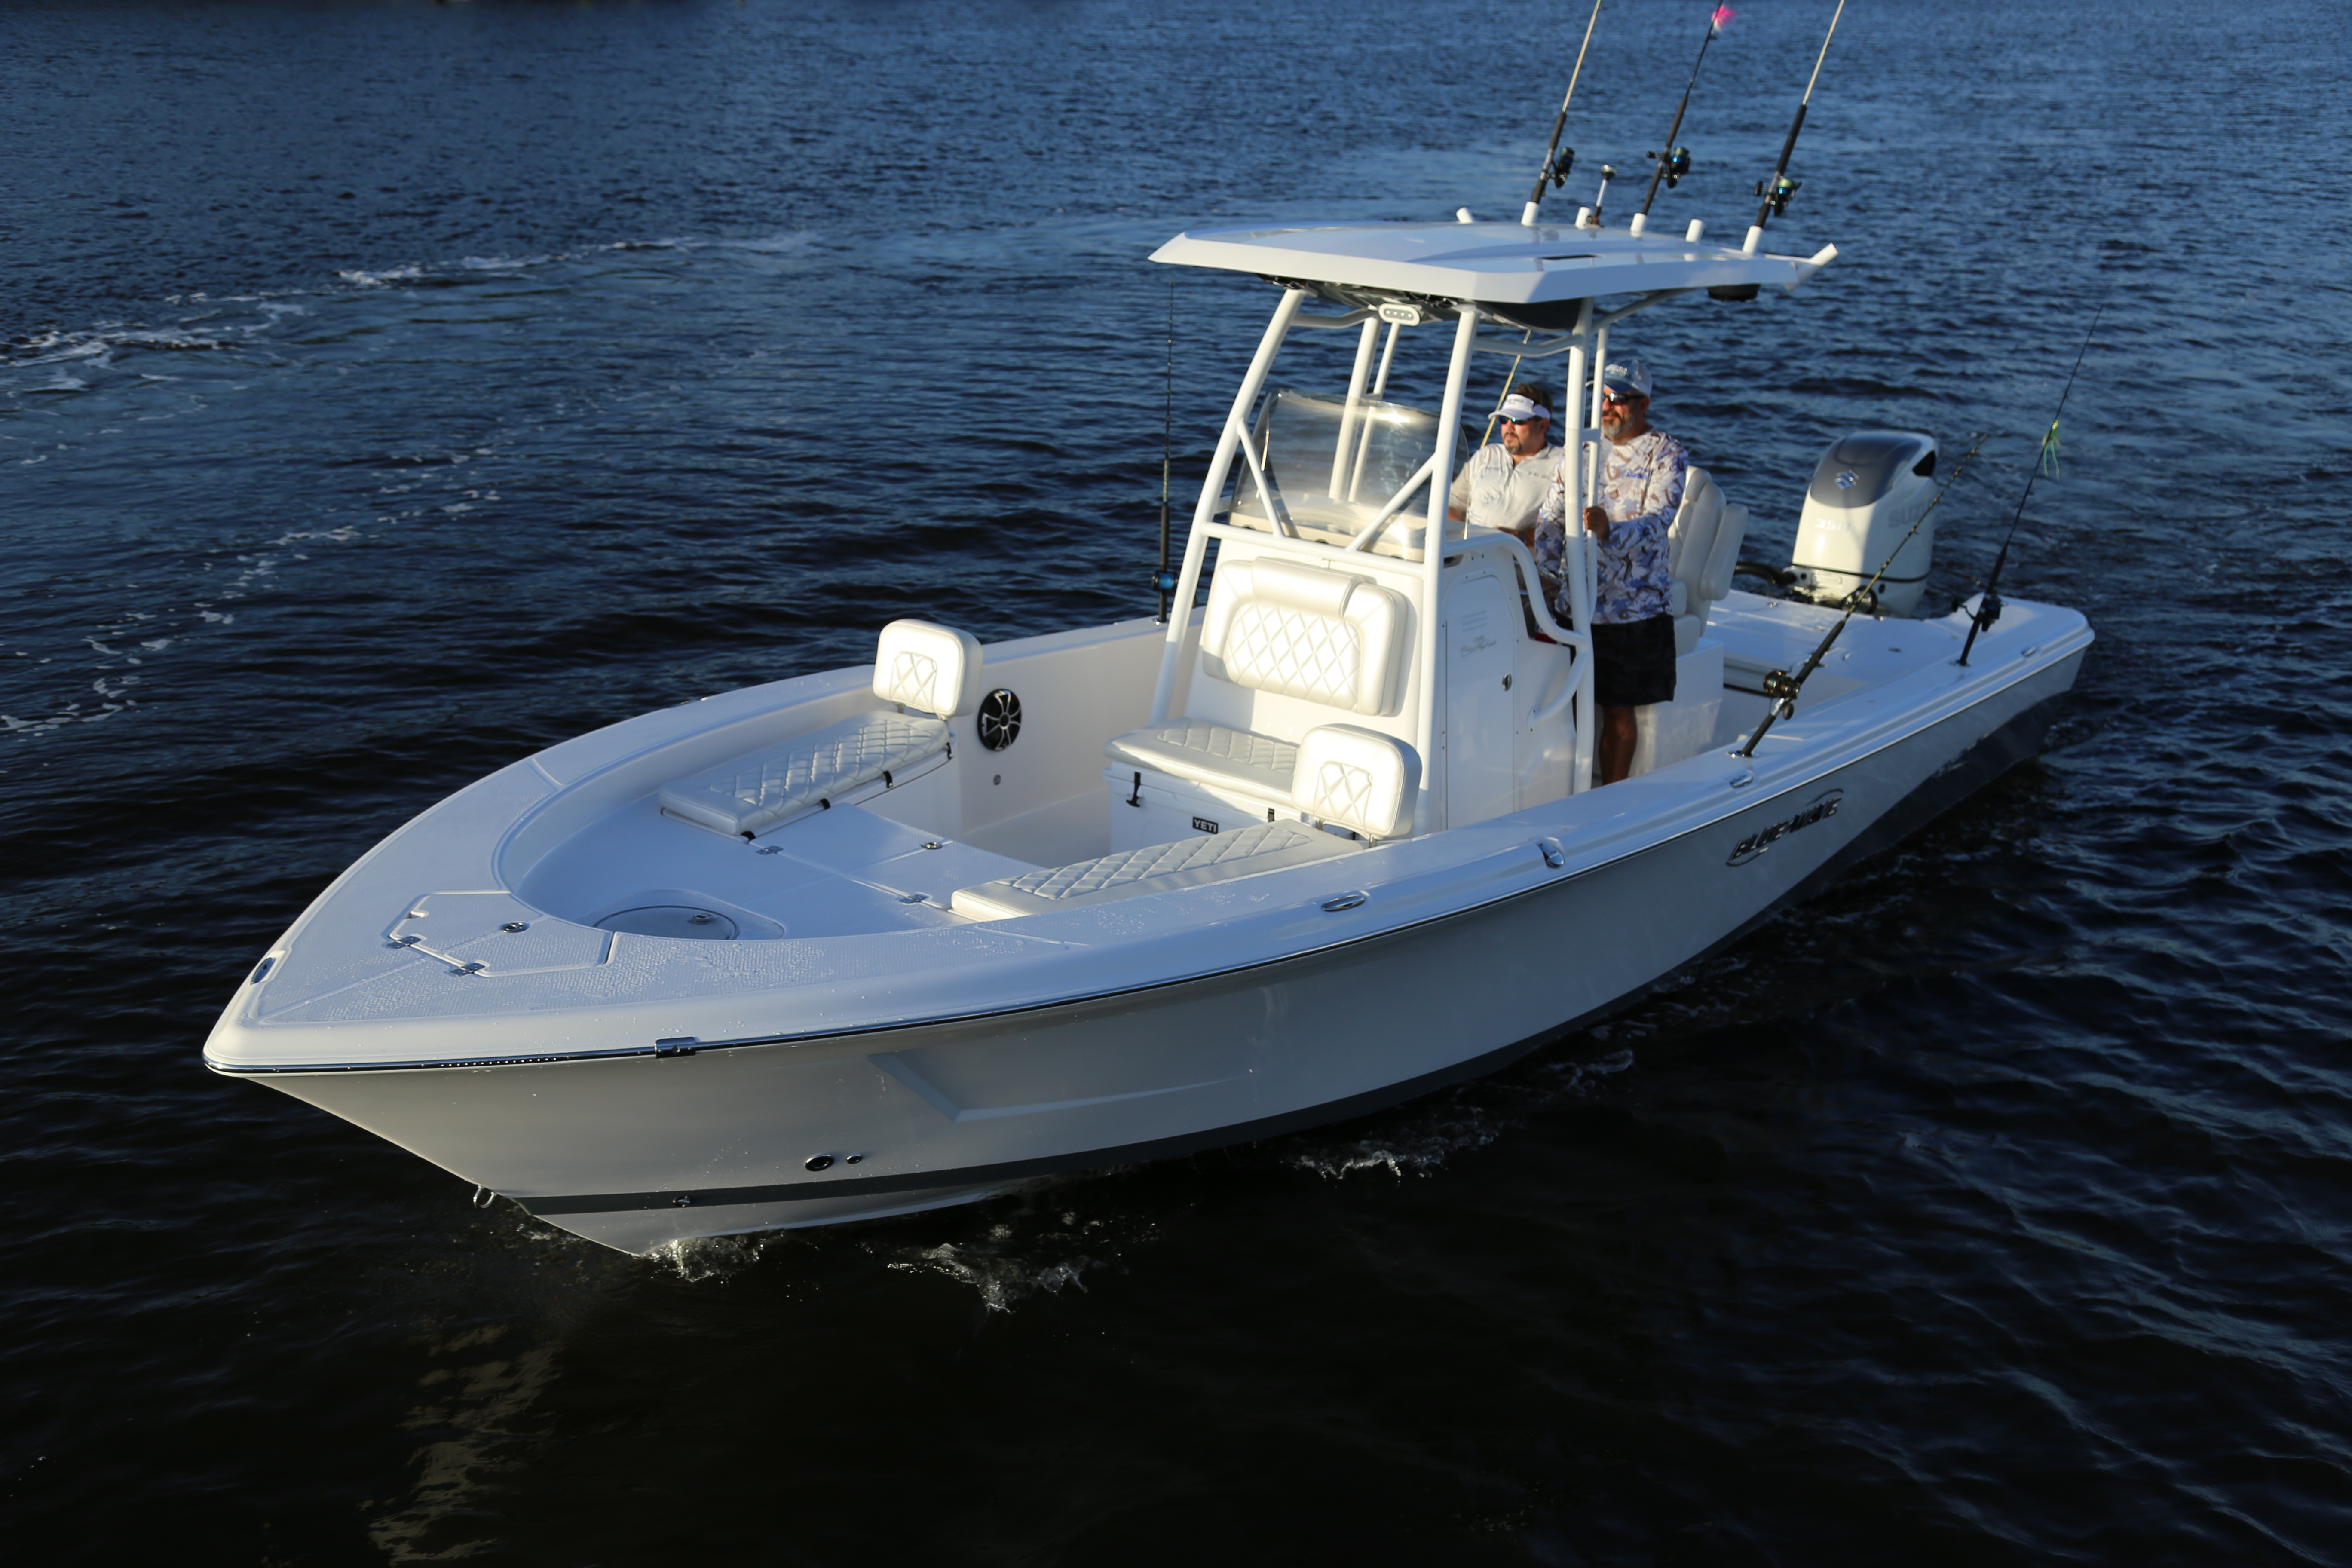 Boat Review - Blue Wave 2800 Pure Hybrid - Florida Sportsman